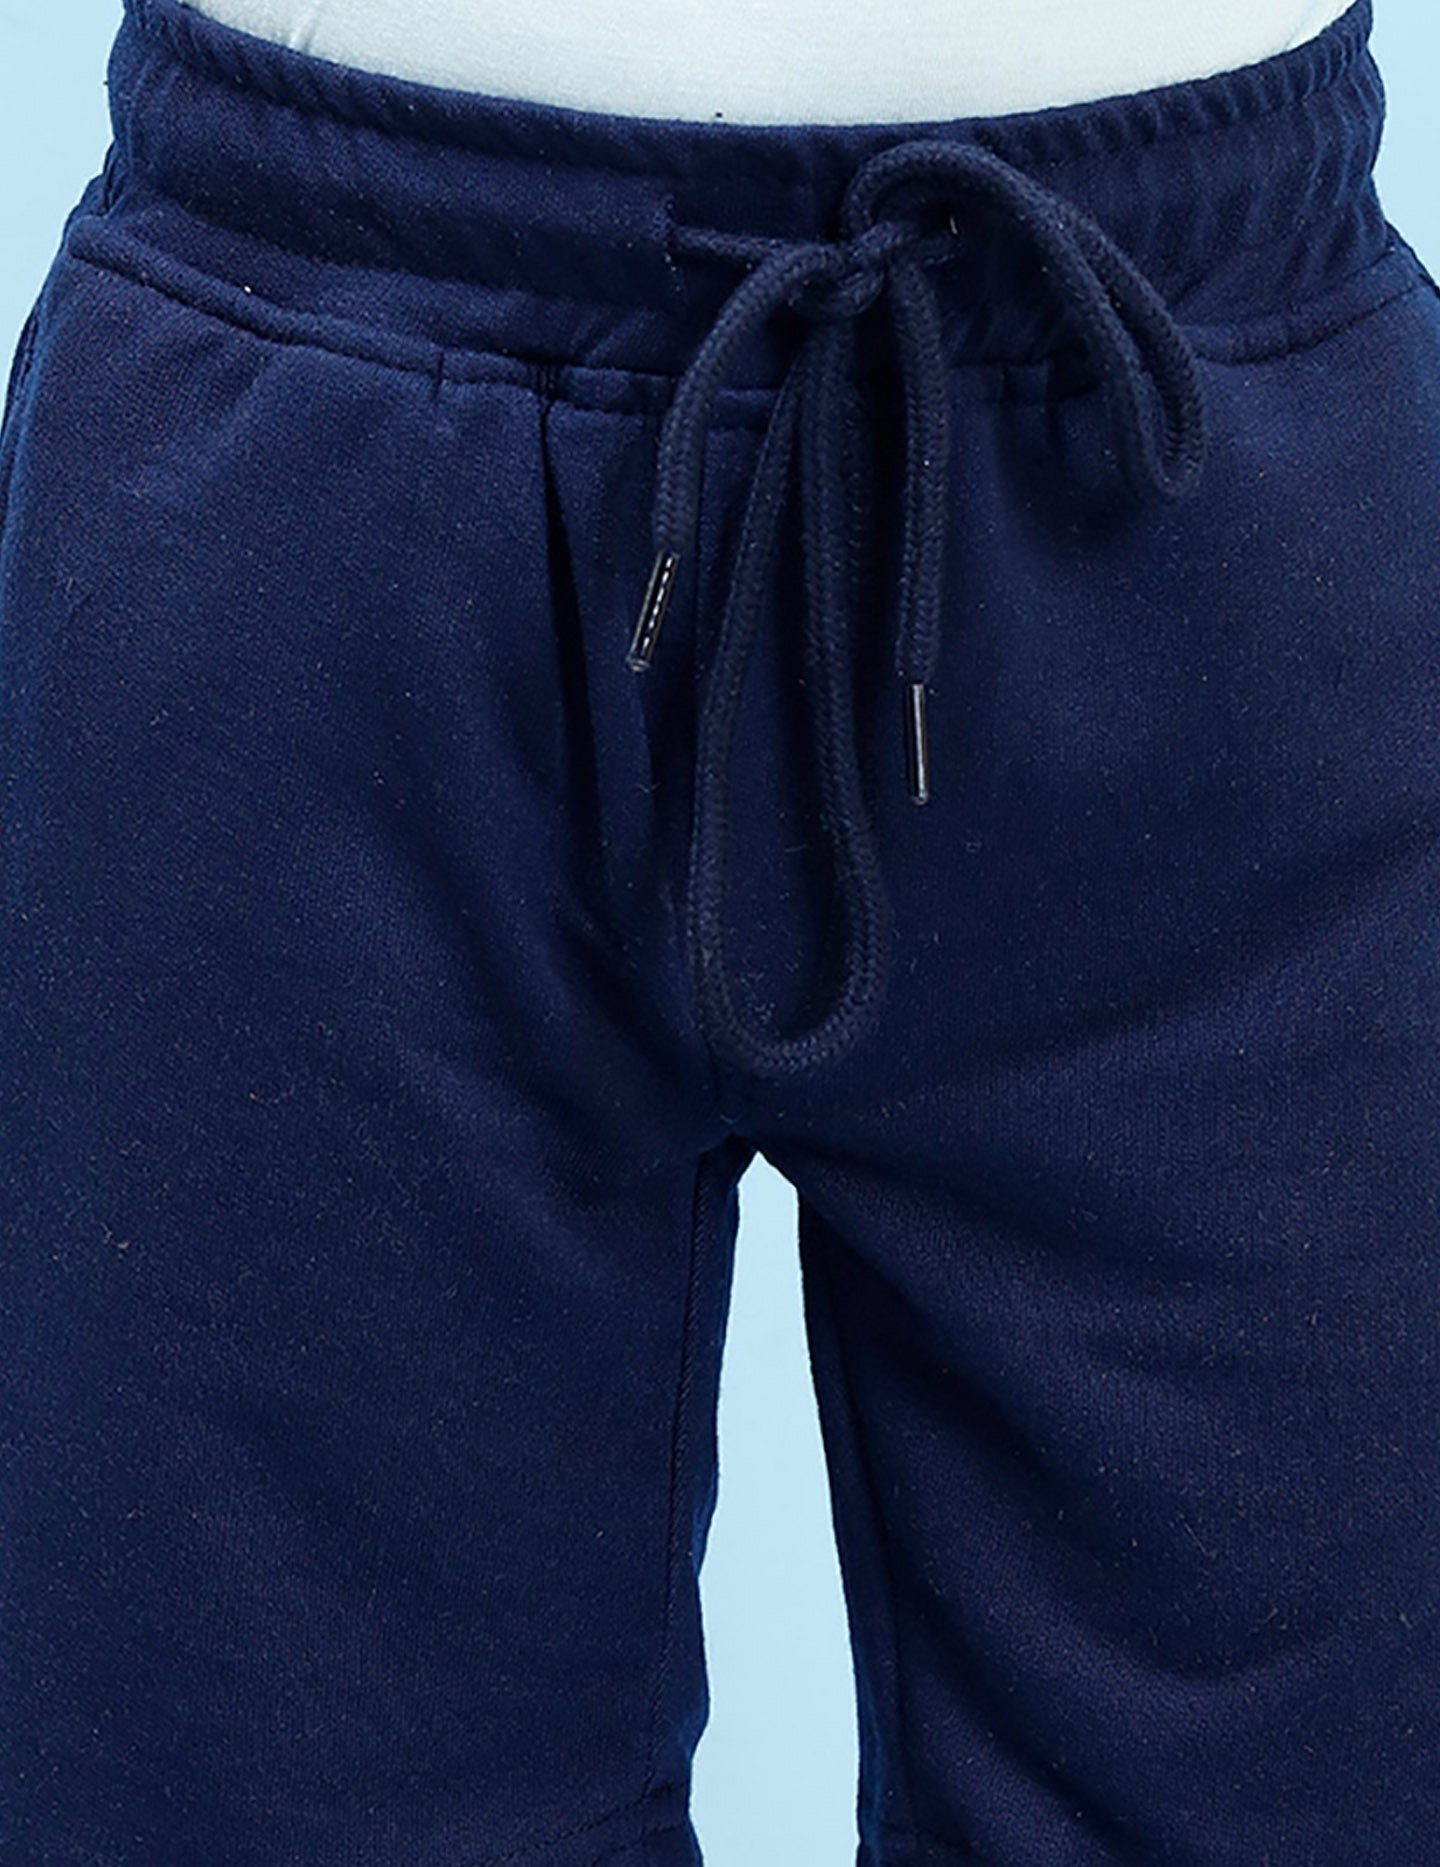 Nusyl Lines Printed Navy Blue Boys Shorts